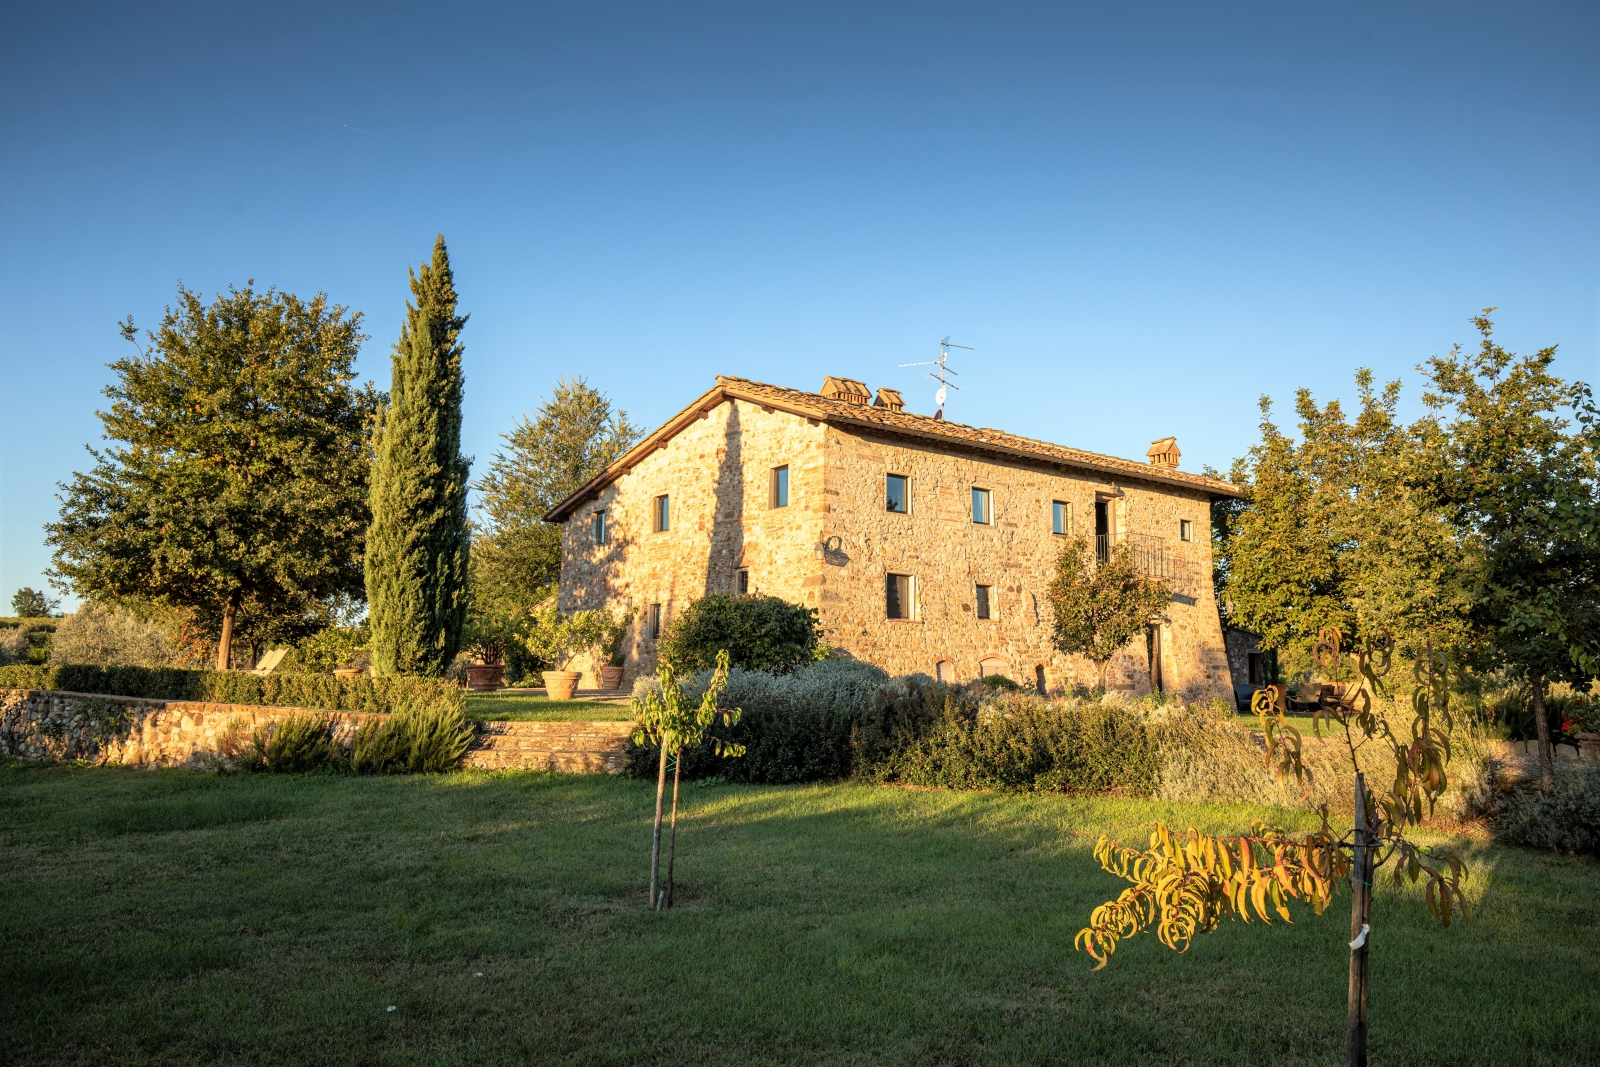 Exterior of villa and garden with trees and plants at Villa Giuliana in Tuscany, Italy